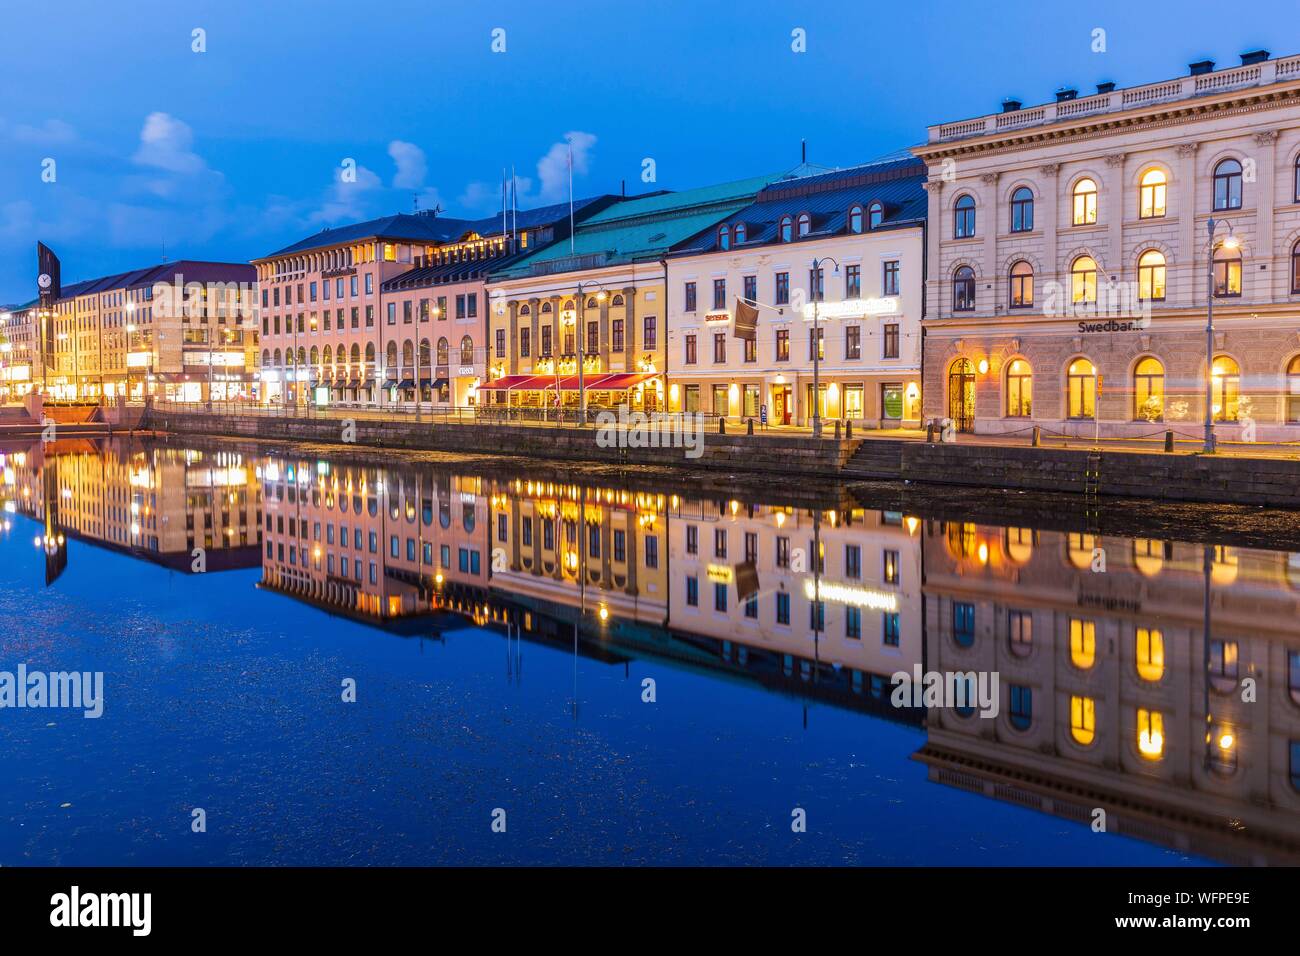 Sweden, Vastra Gotaland, Goteborg (Gothenburg), Hamm-Kanalen canal Stock Photo